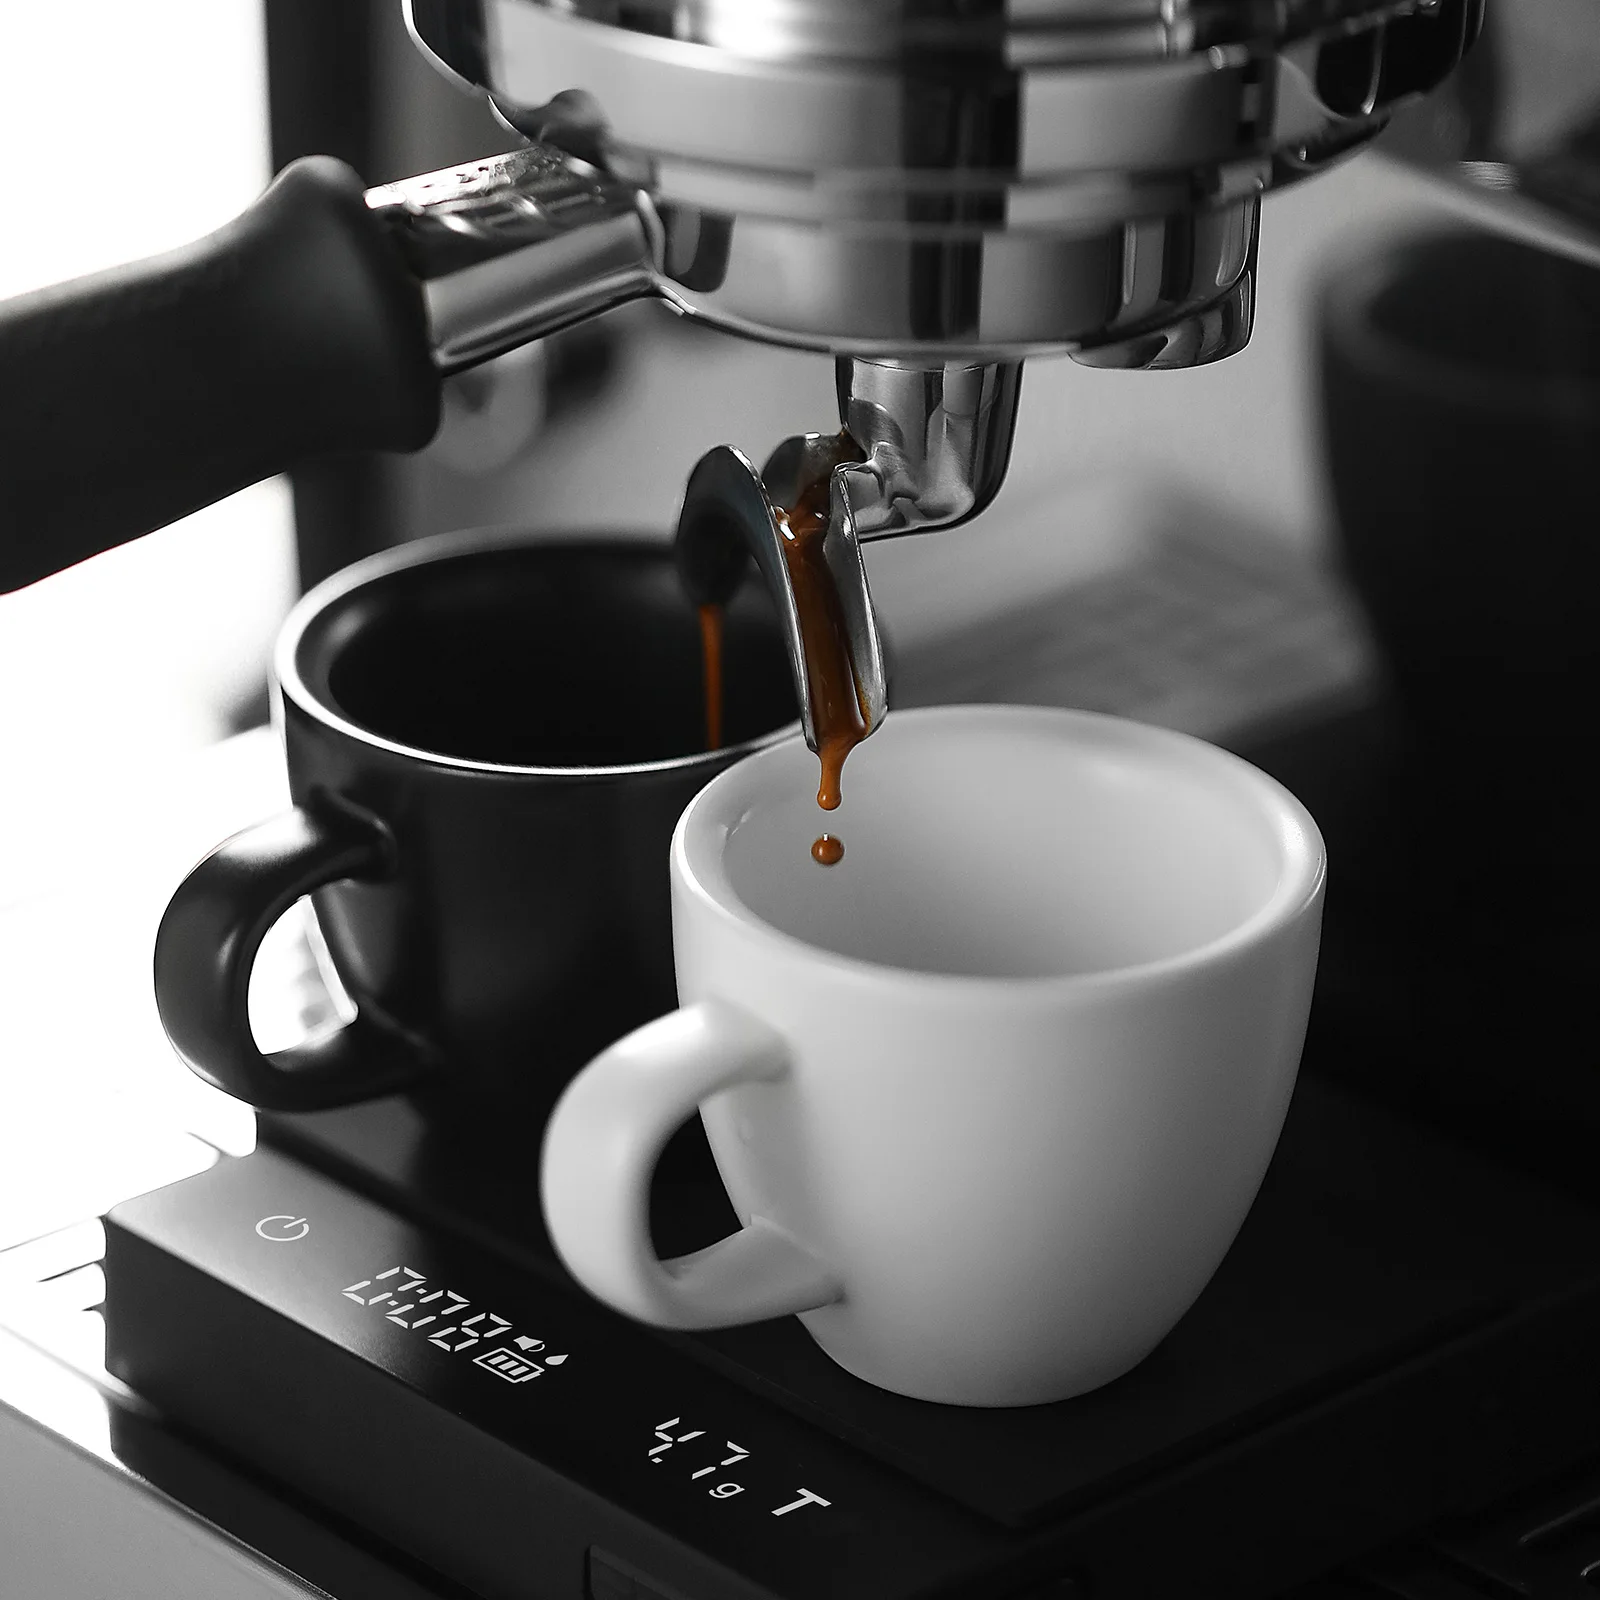 

MHW-3BOMBER 80ml Ceramic Espresso Cup with Saucer Set Latte Art Mugs Coffee Mug Professional Home Barista Tool Accessories